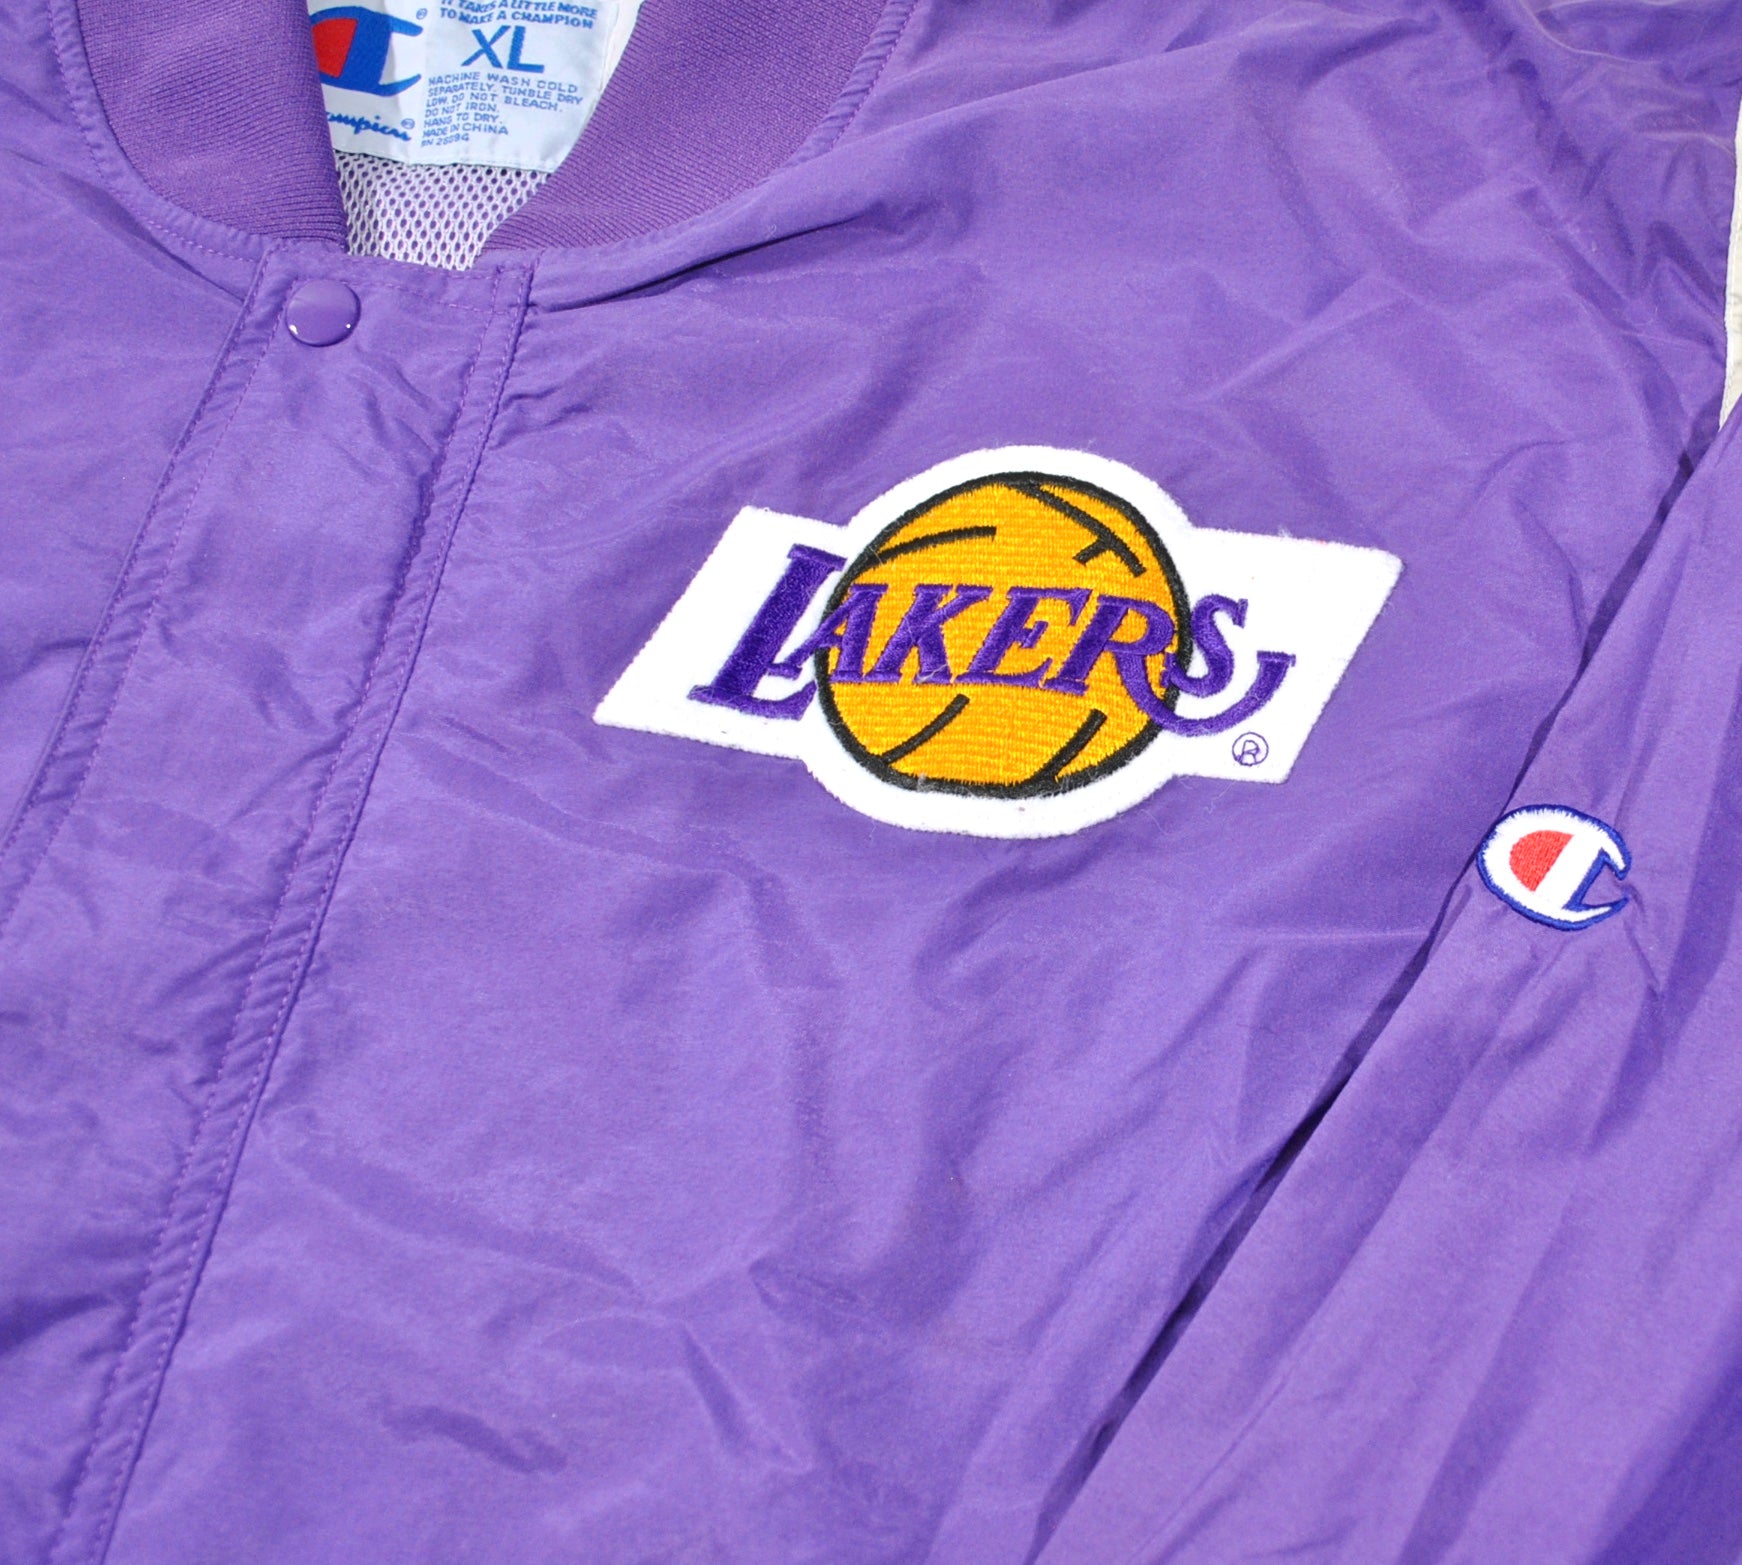 Vintage Los Angeles Lakers Champion Brand Jacket & Pants Size X